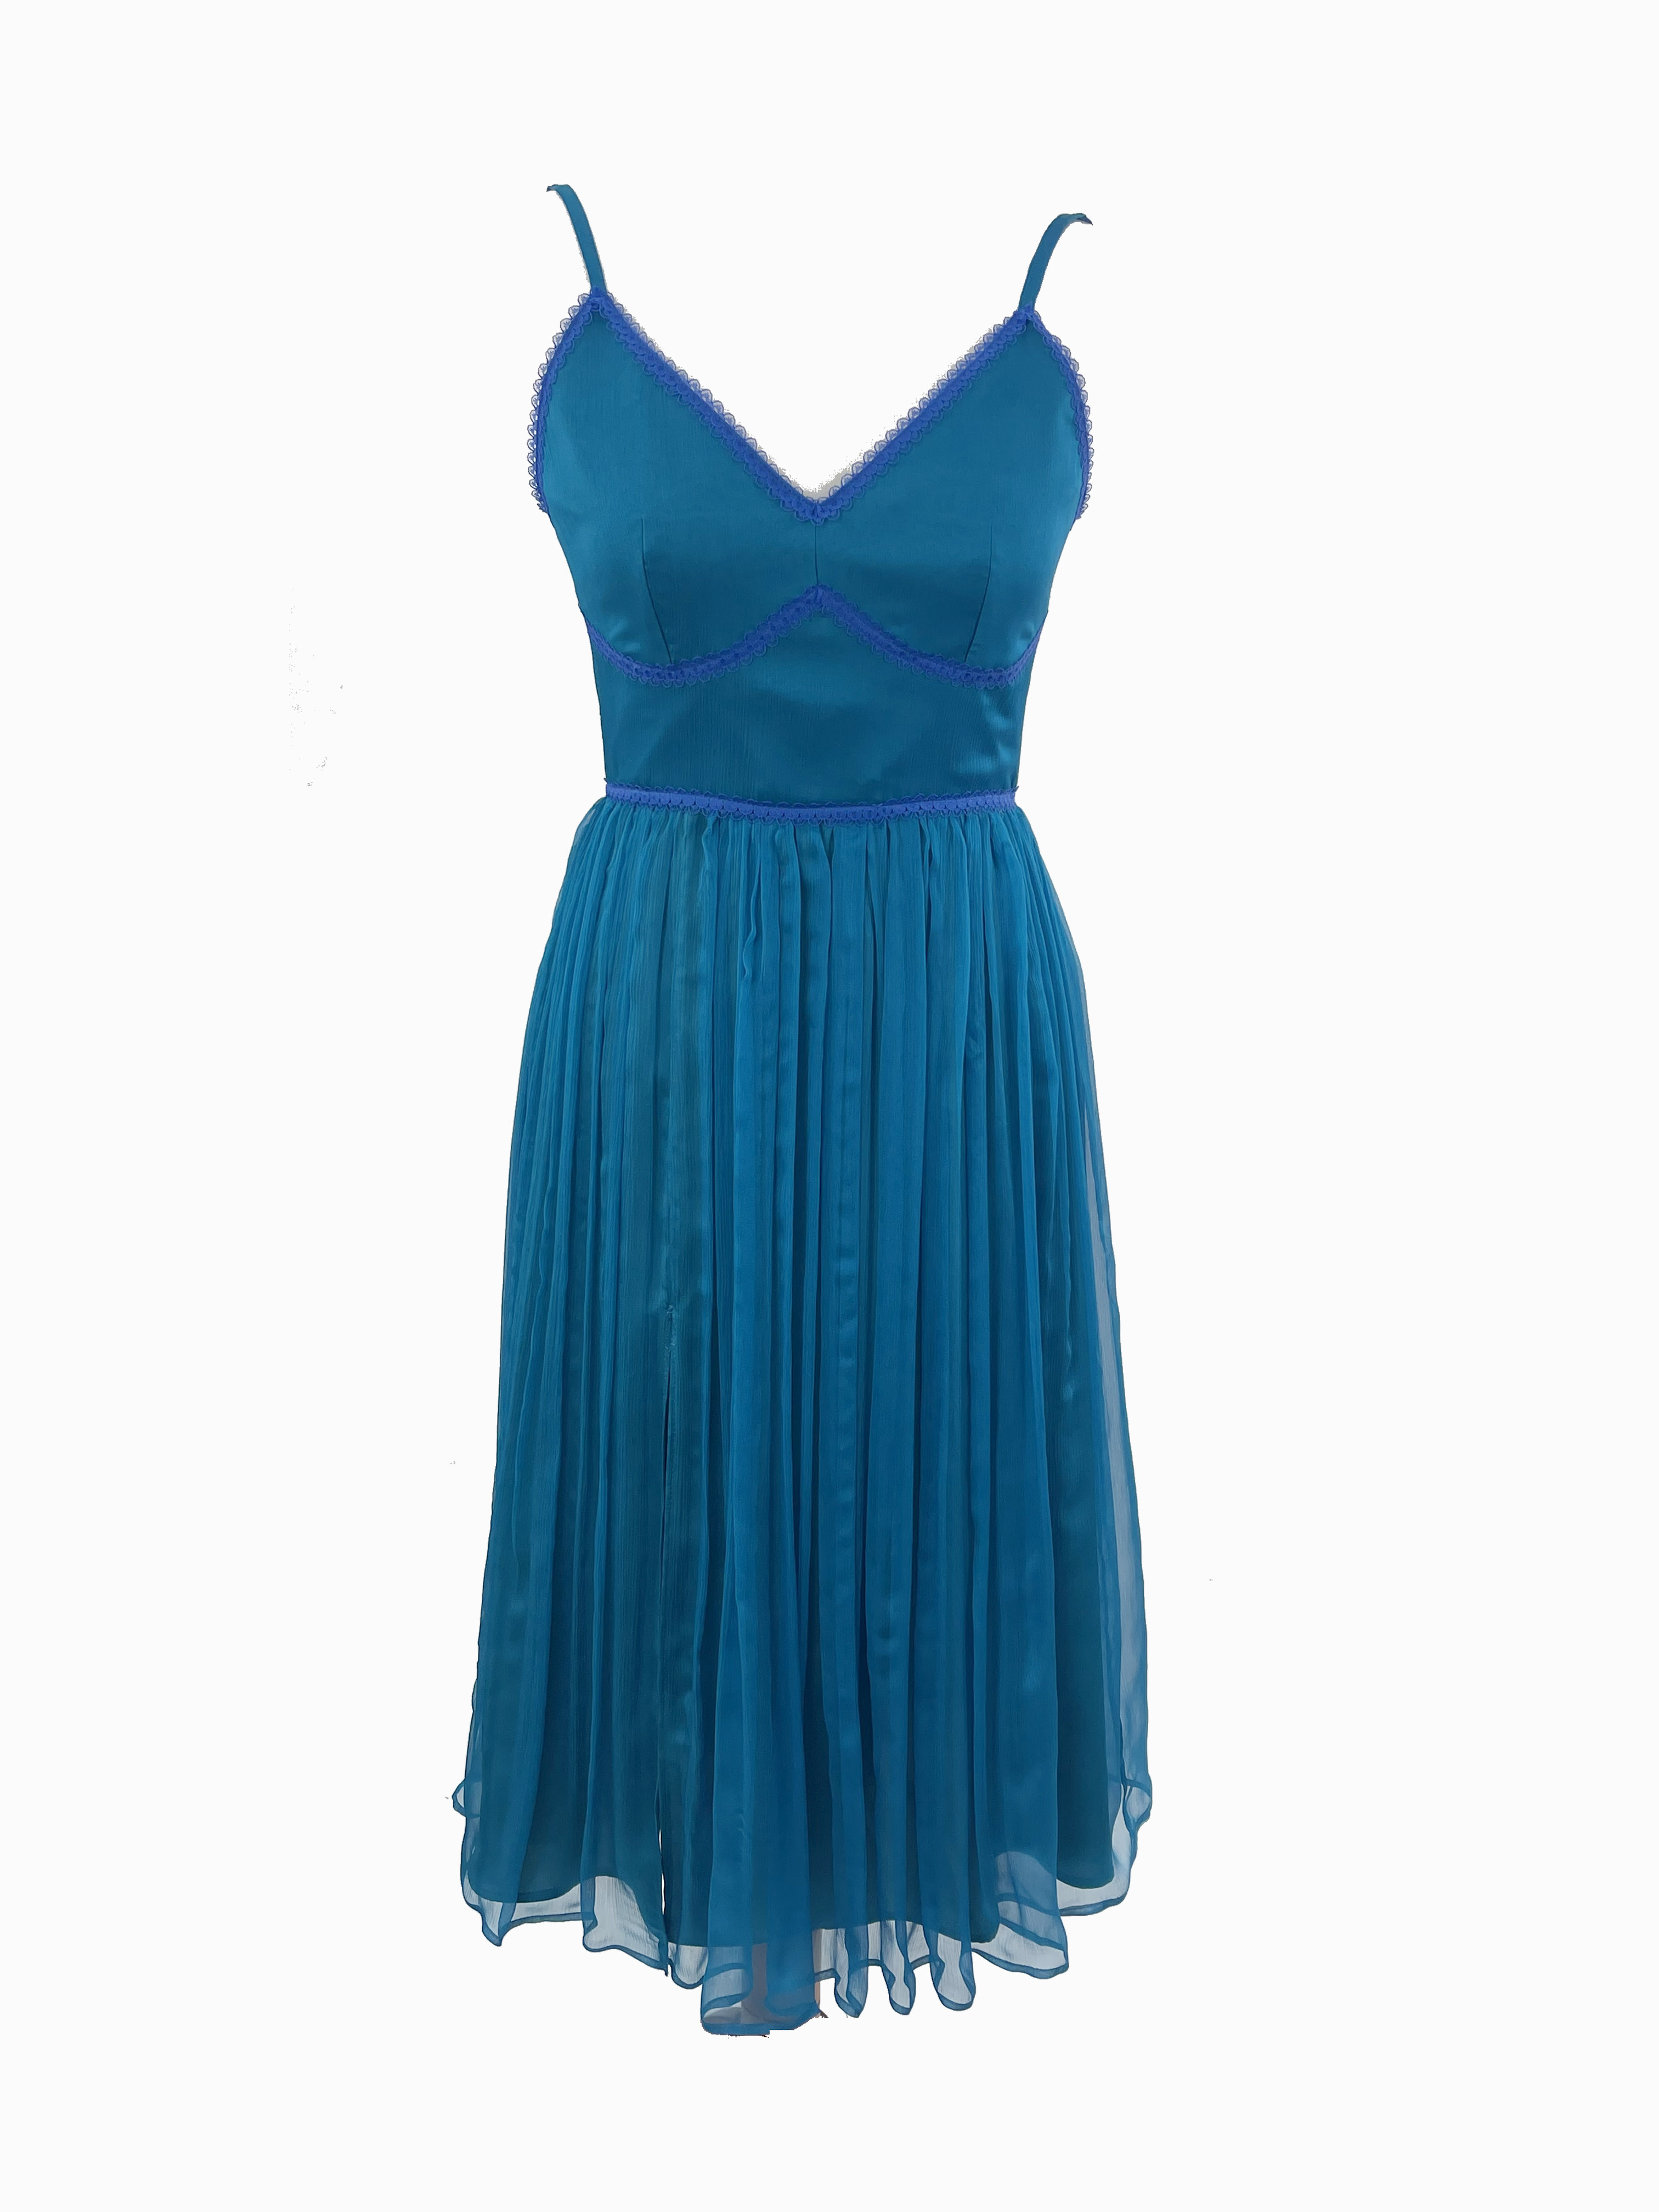 R24118 01 - MIRU midi turquoise silk dress with electric blue lace